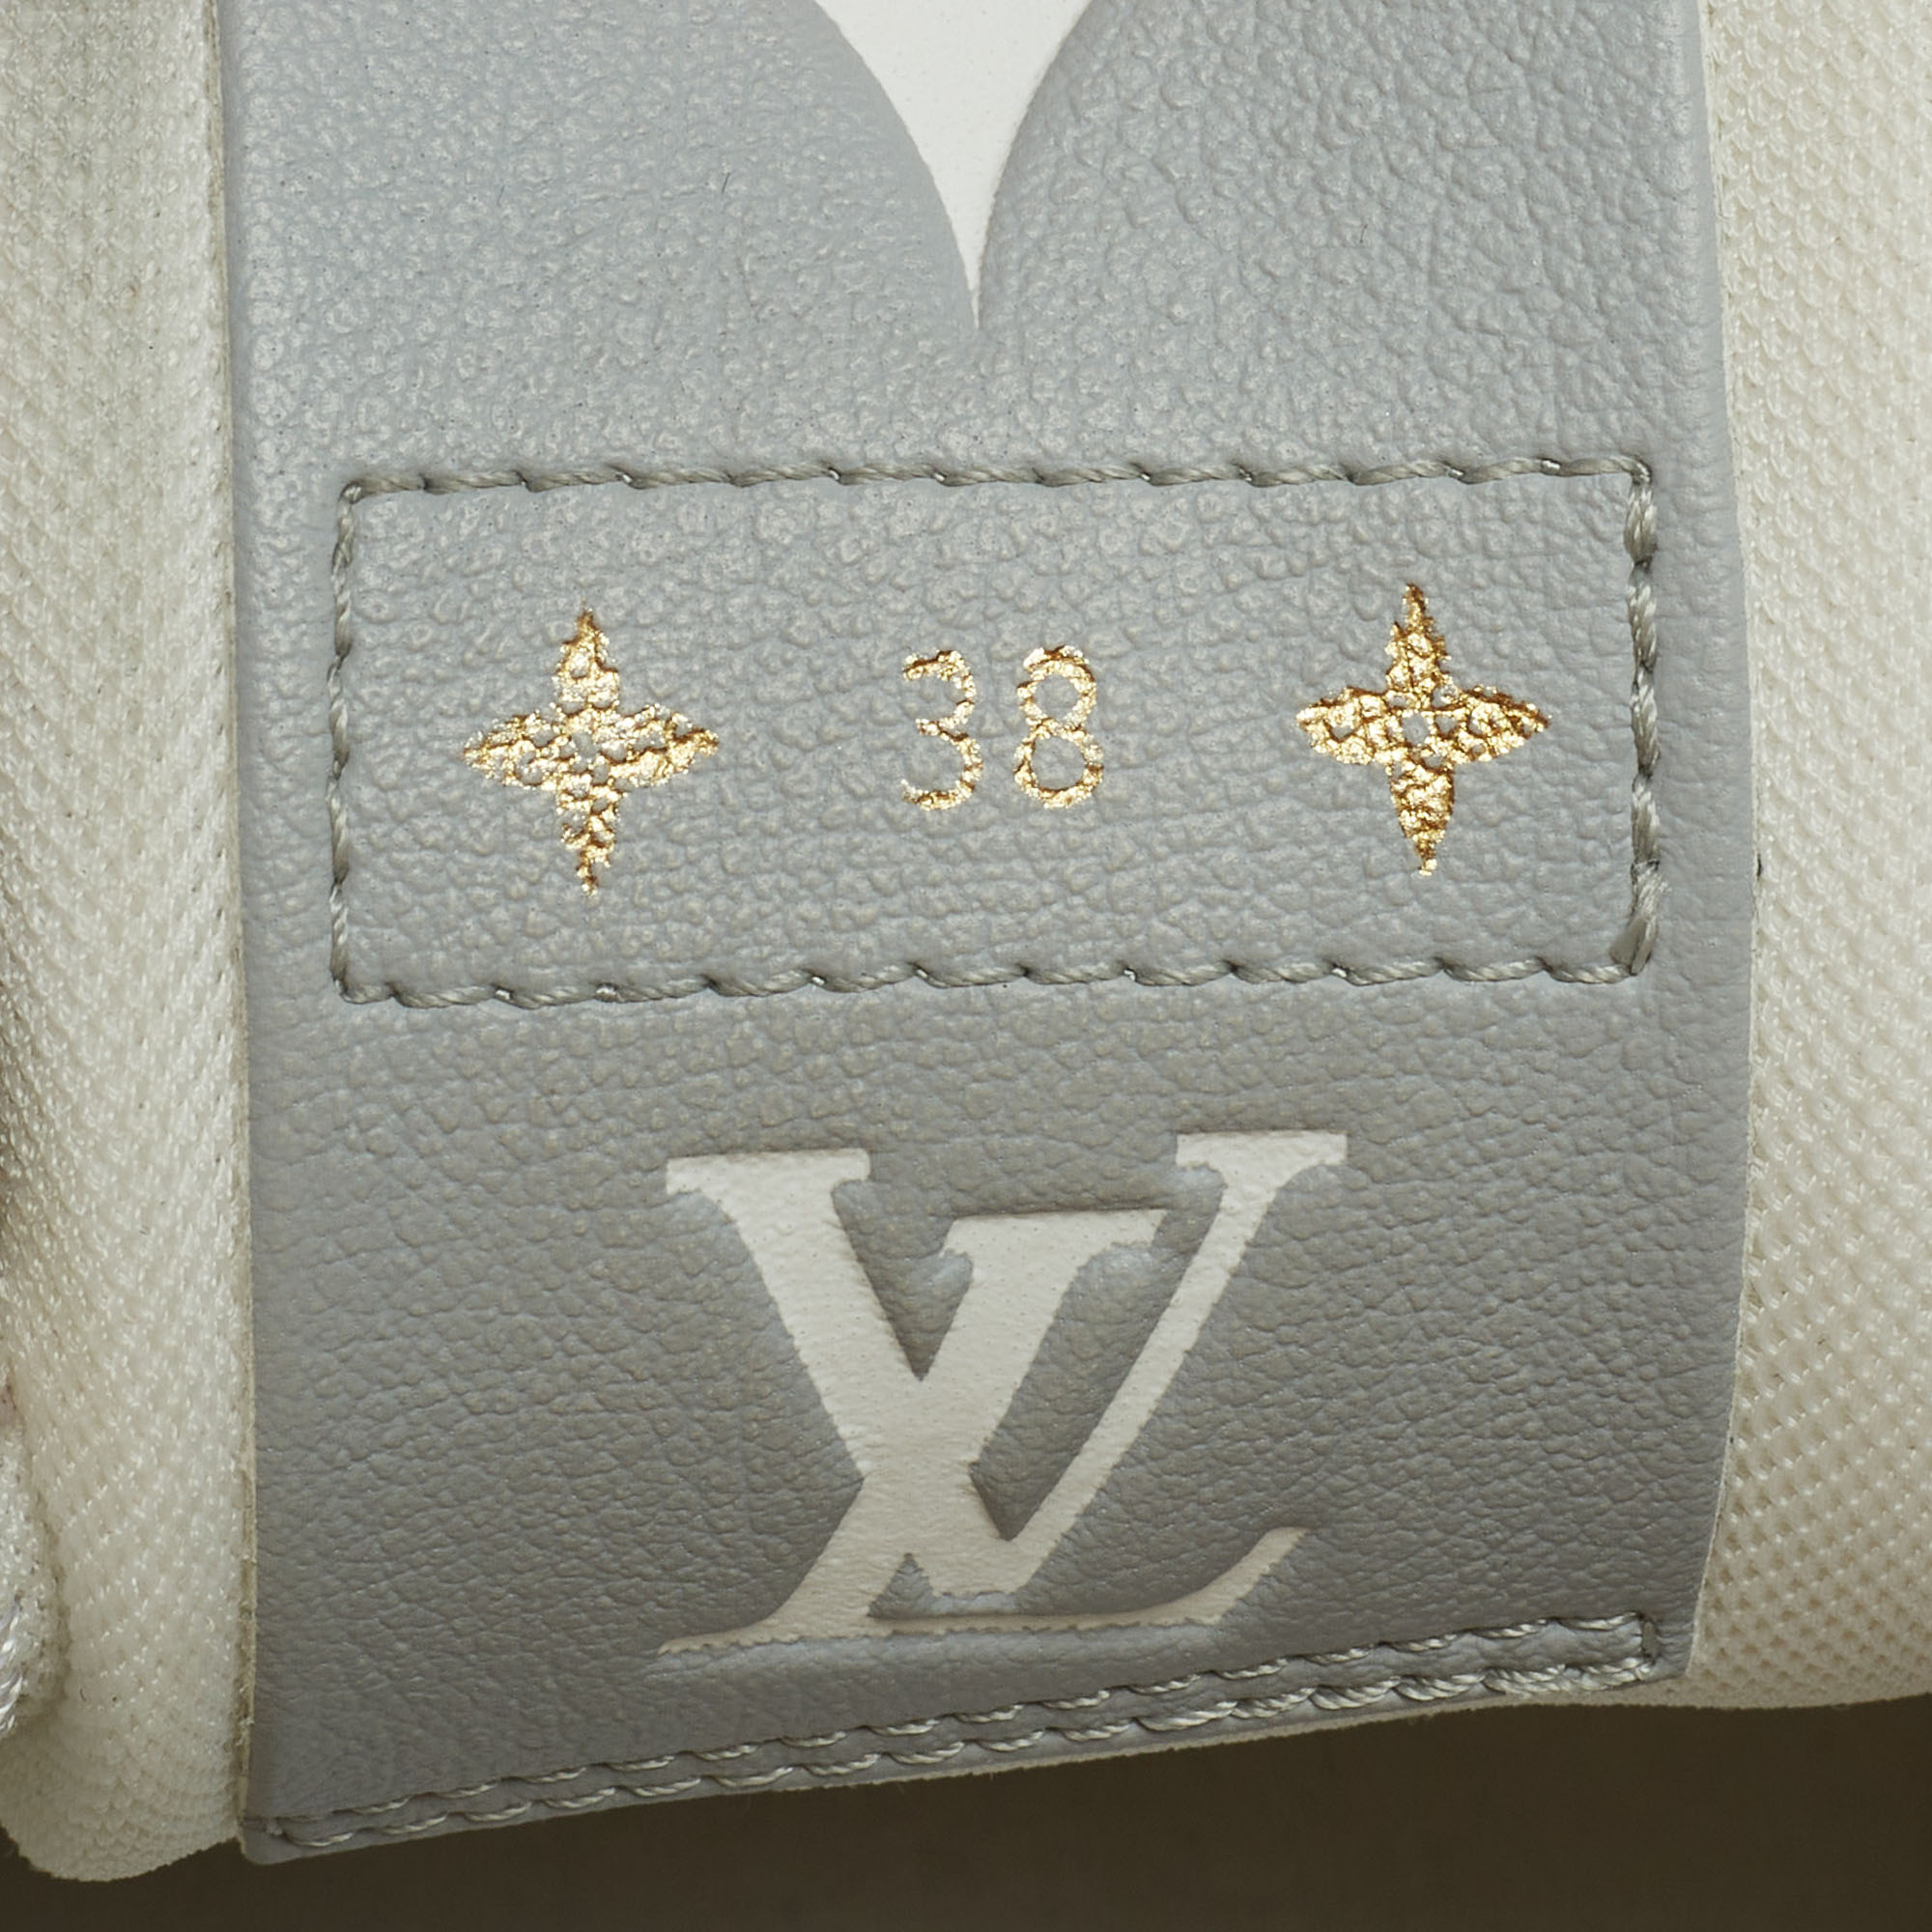 Louis Vuitton White Leather LV Logo Low Top Sneakers Size 38